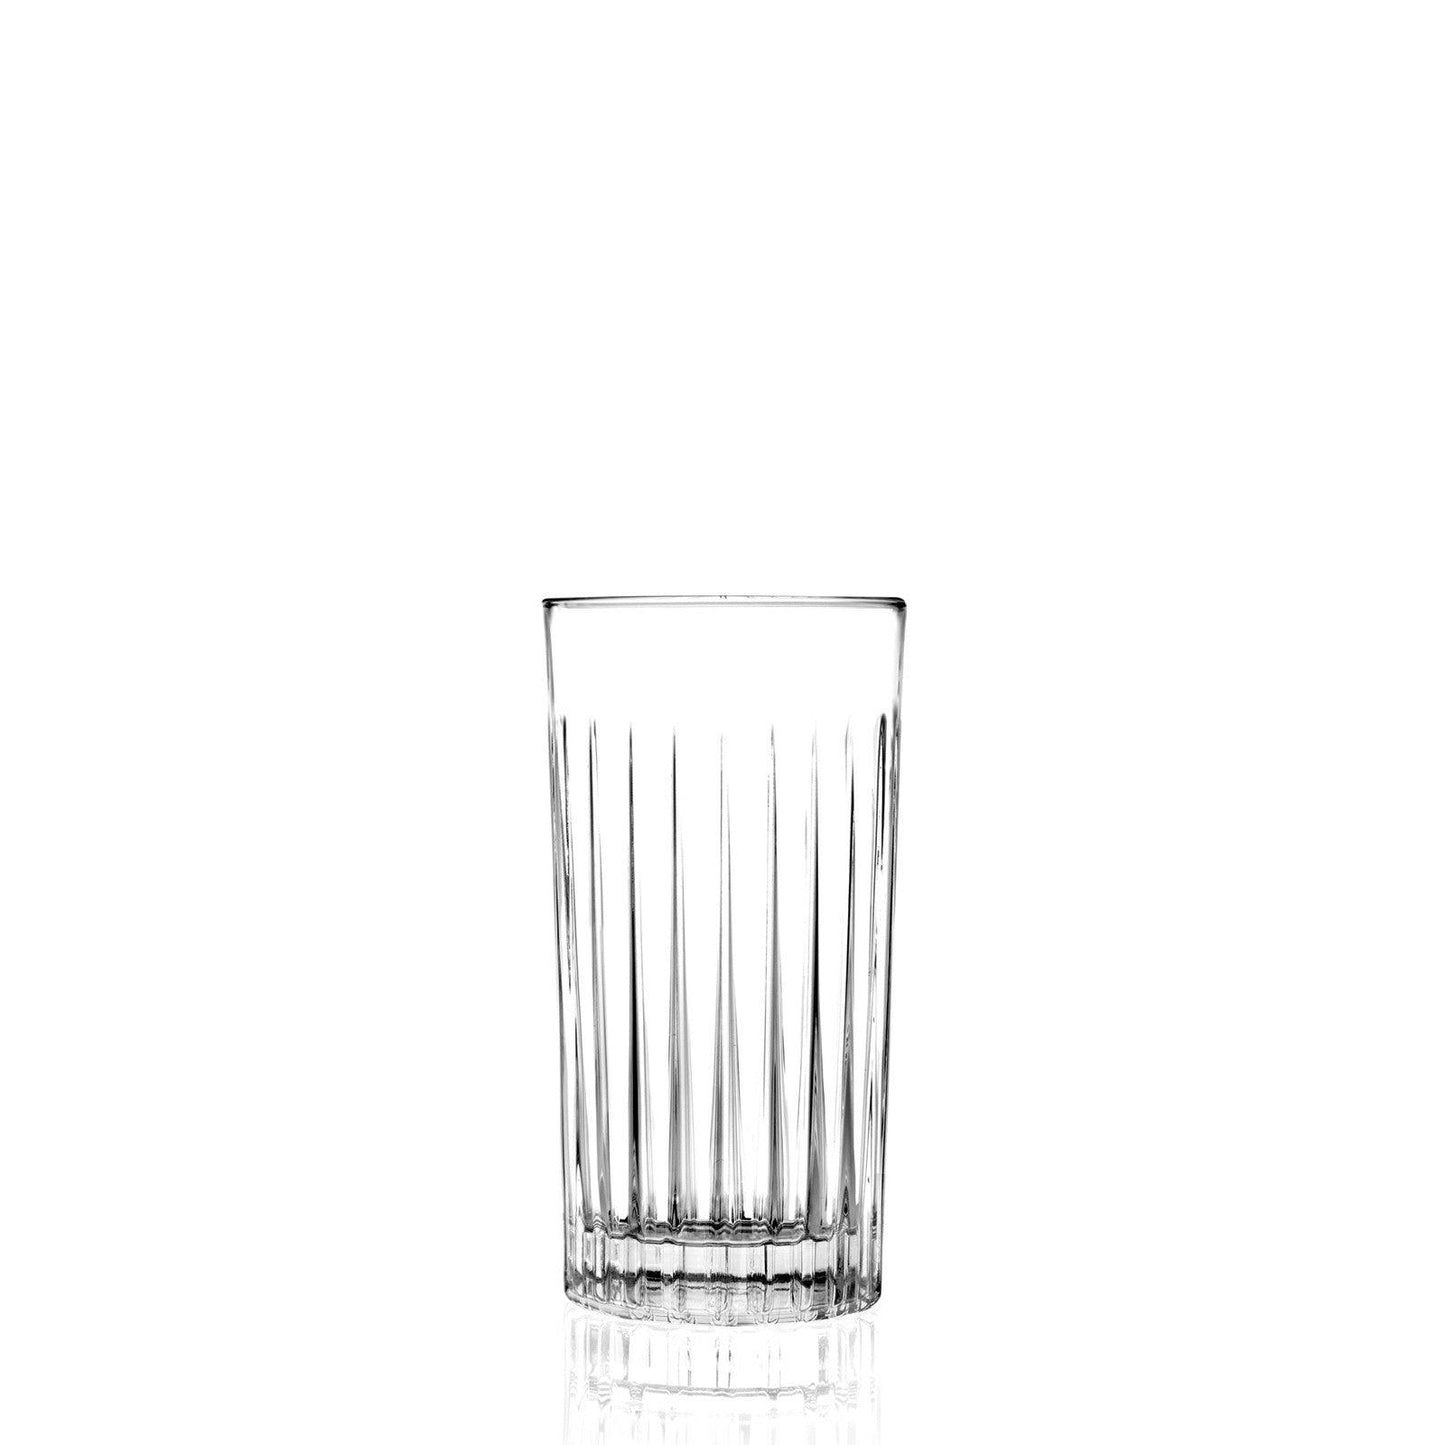 Timeless Premium Crystal Hi-Ball Glasses, Italy (set of 6) - Happyware Home Pvt Ltd